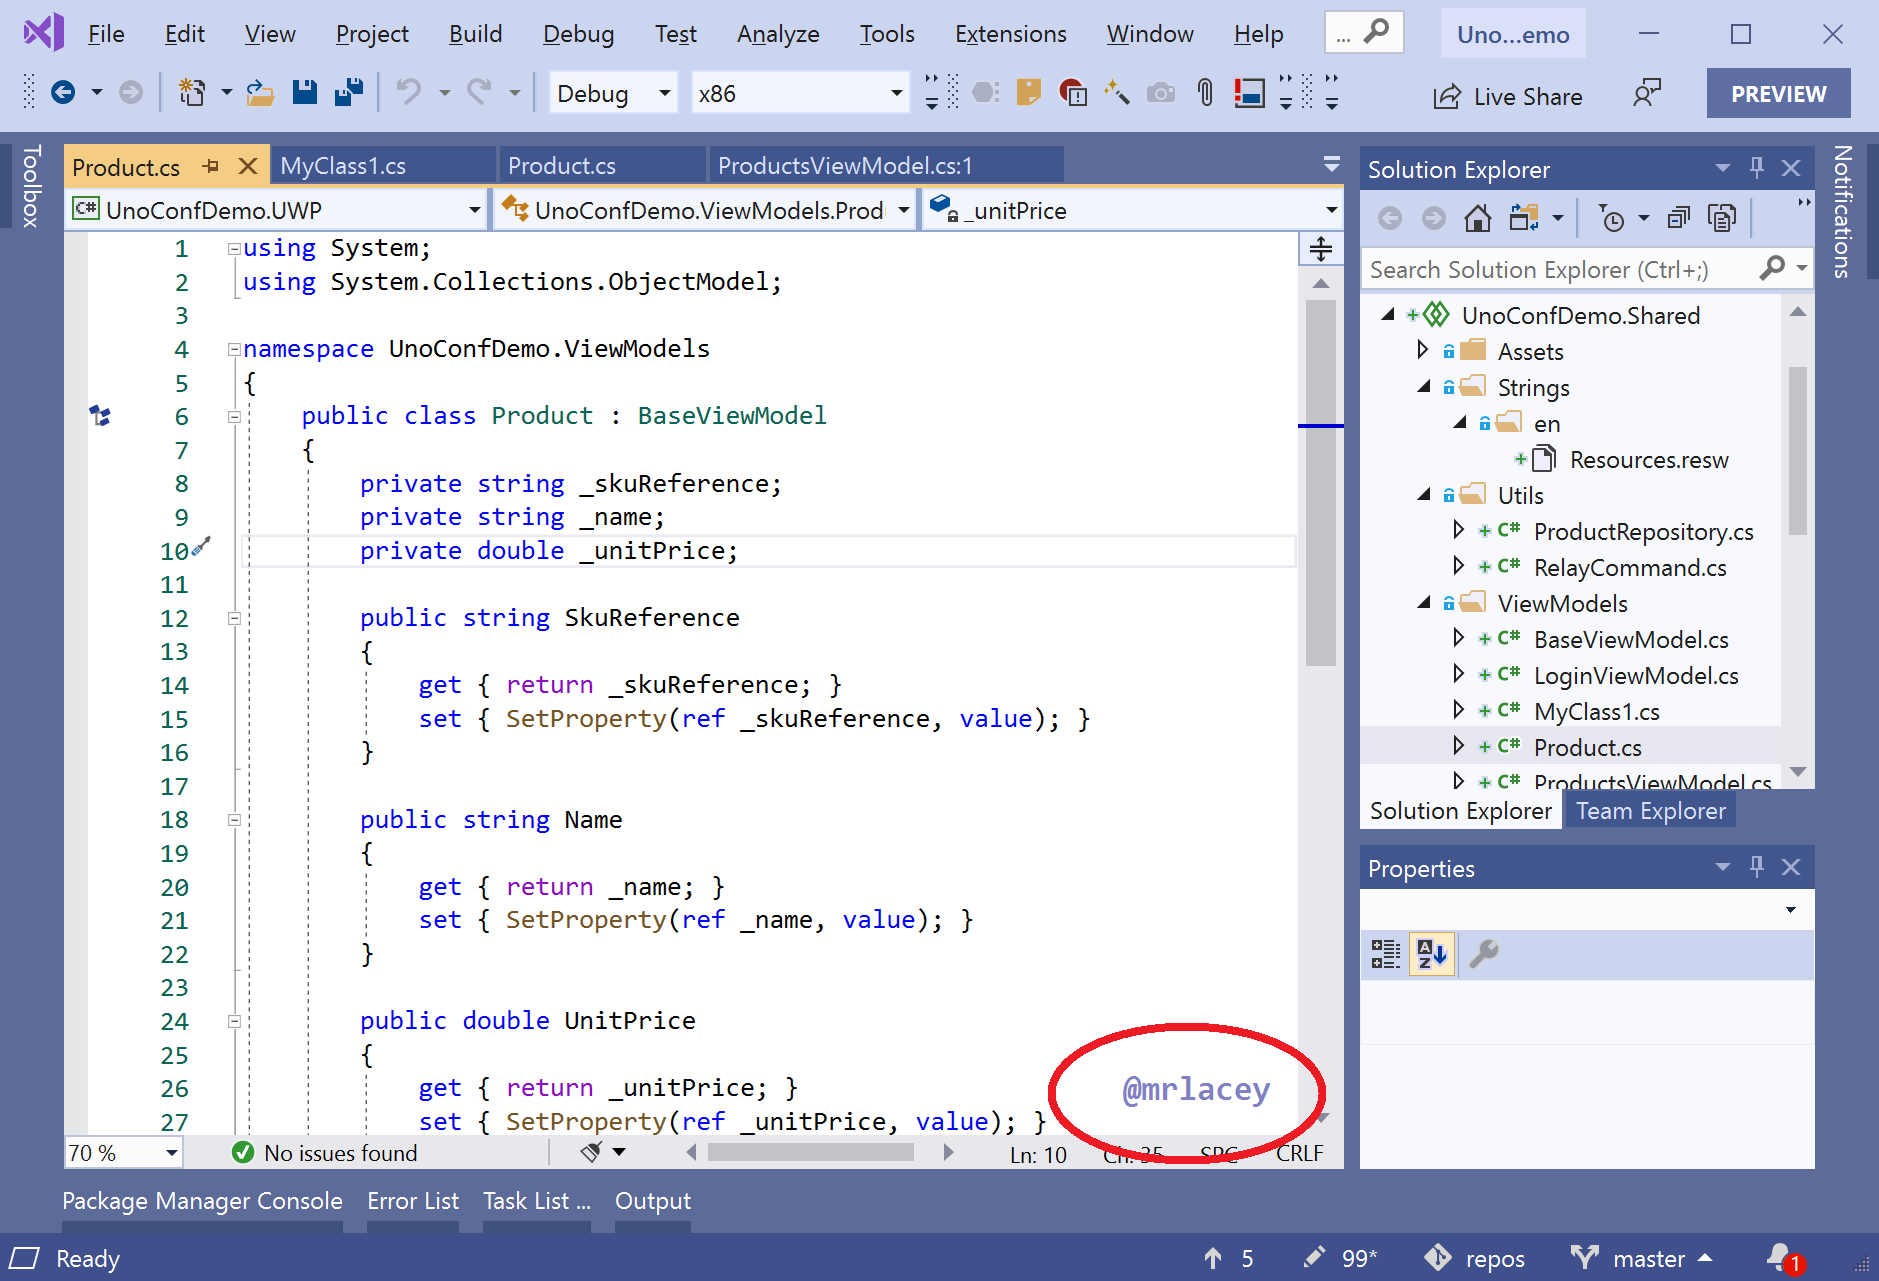 Visual Studio Editor window showing (highlighted) as watermark of my Twitter handle